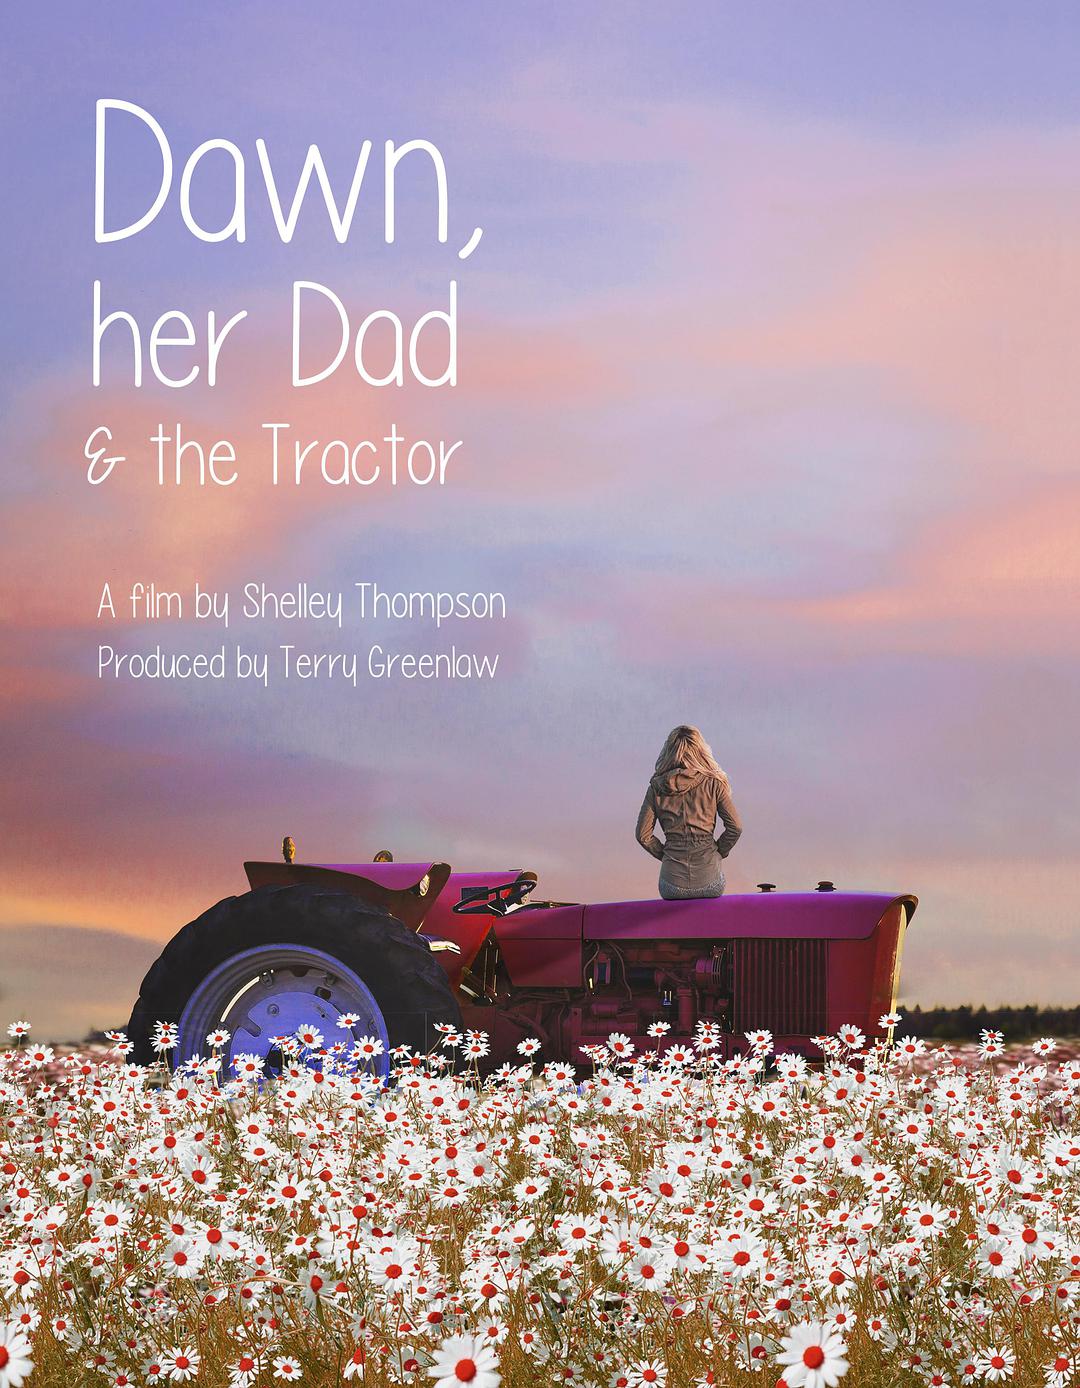 悠悠MP4_MP4电影下载_黎明的父亲与拖拉机 Dawn.Her.Dad.And.The.Tractor.2021.1080p.WEBRip.x265-RARBG 1.43 GB